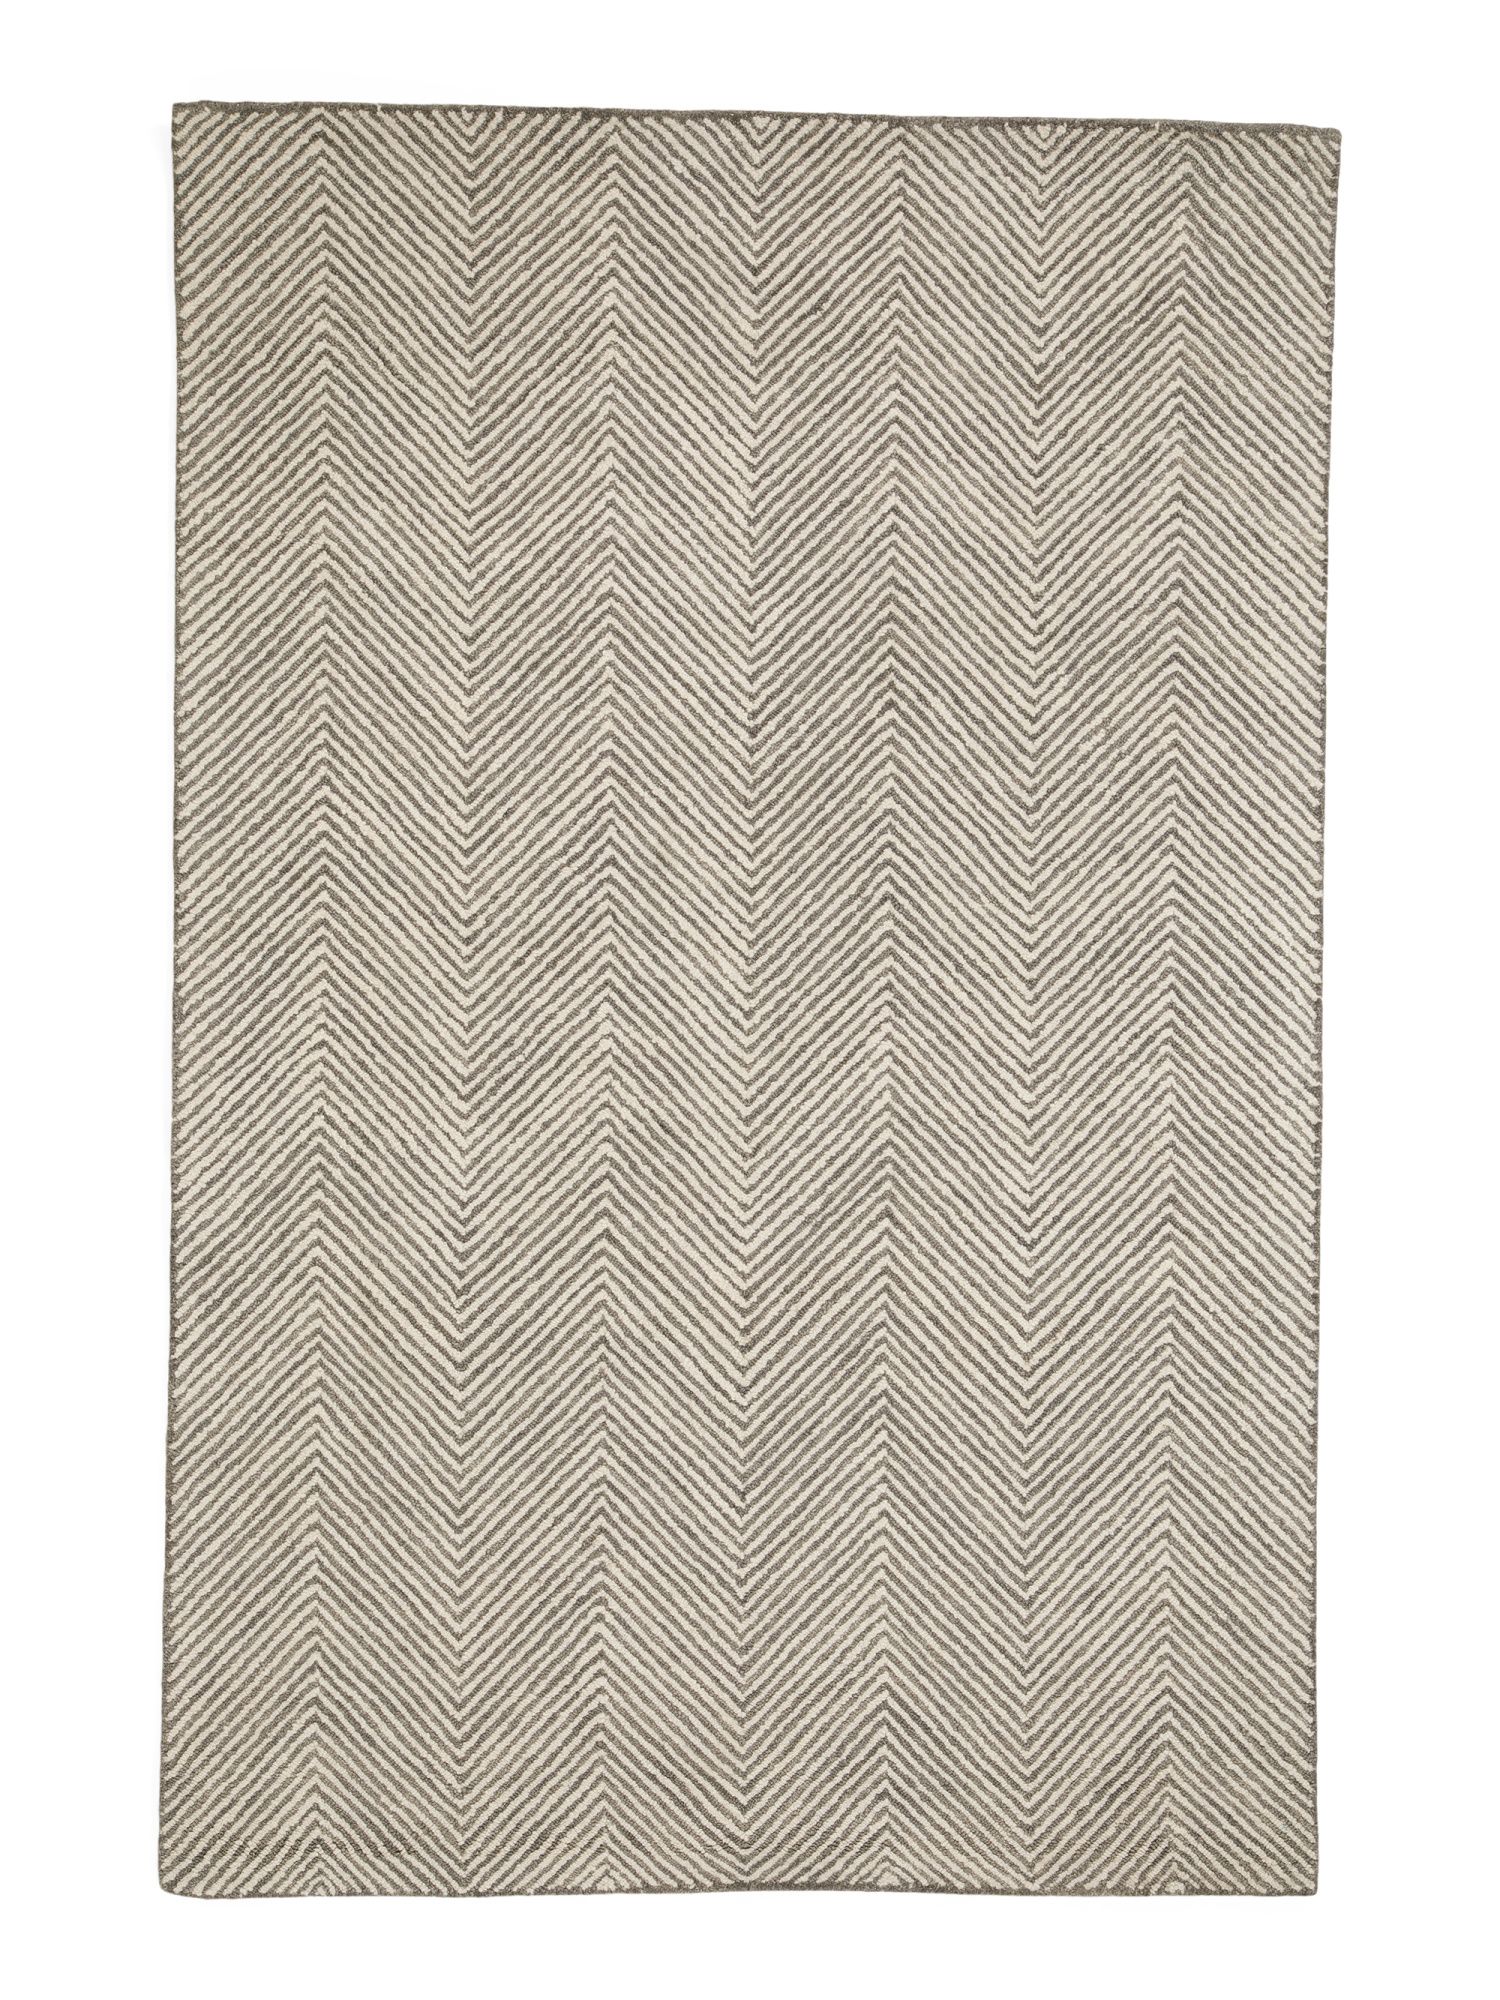 Wool Herringbone Contemporary Area Rug | TJ Maxx